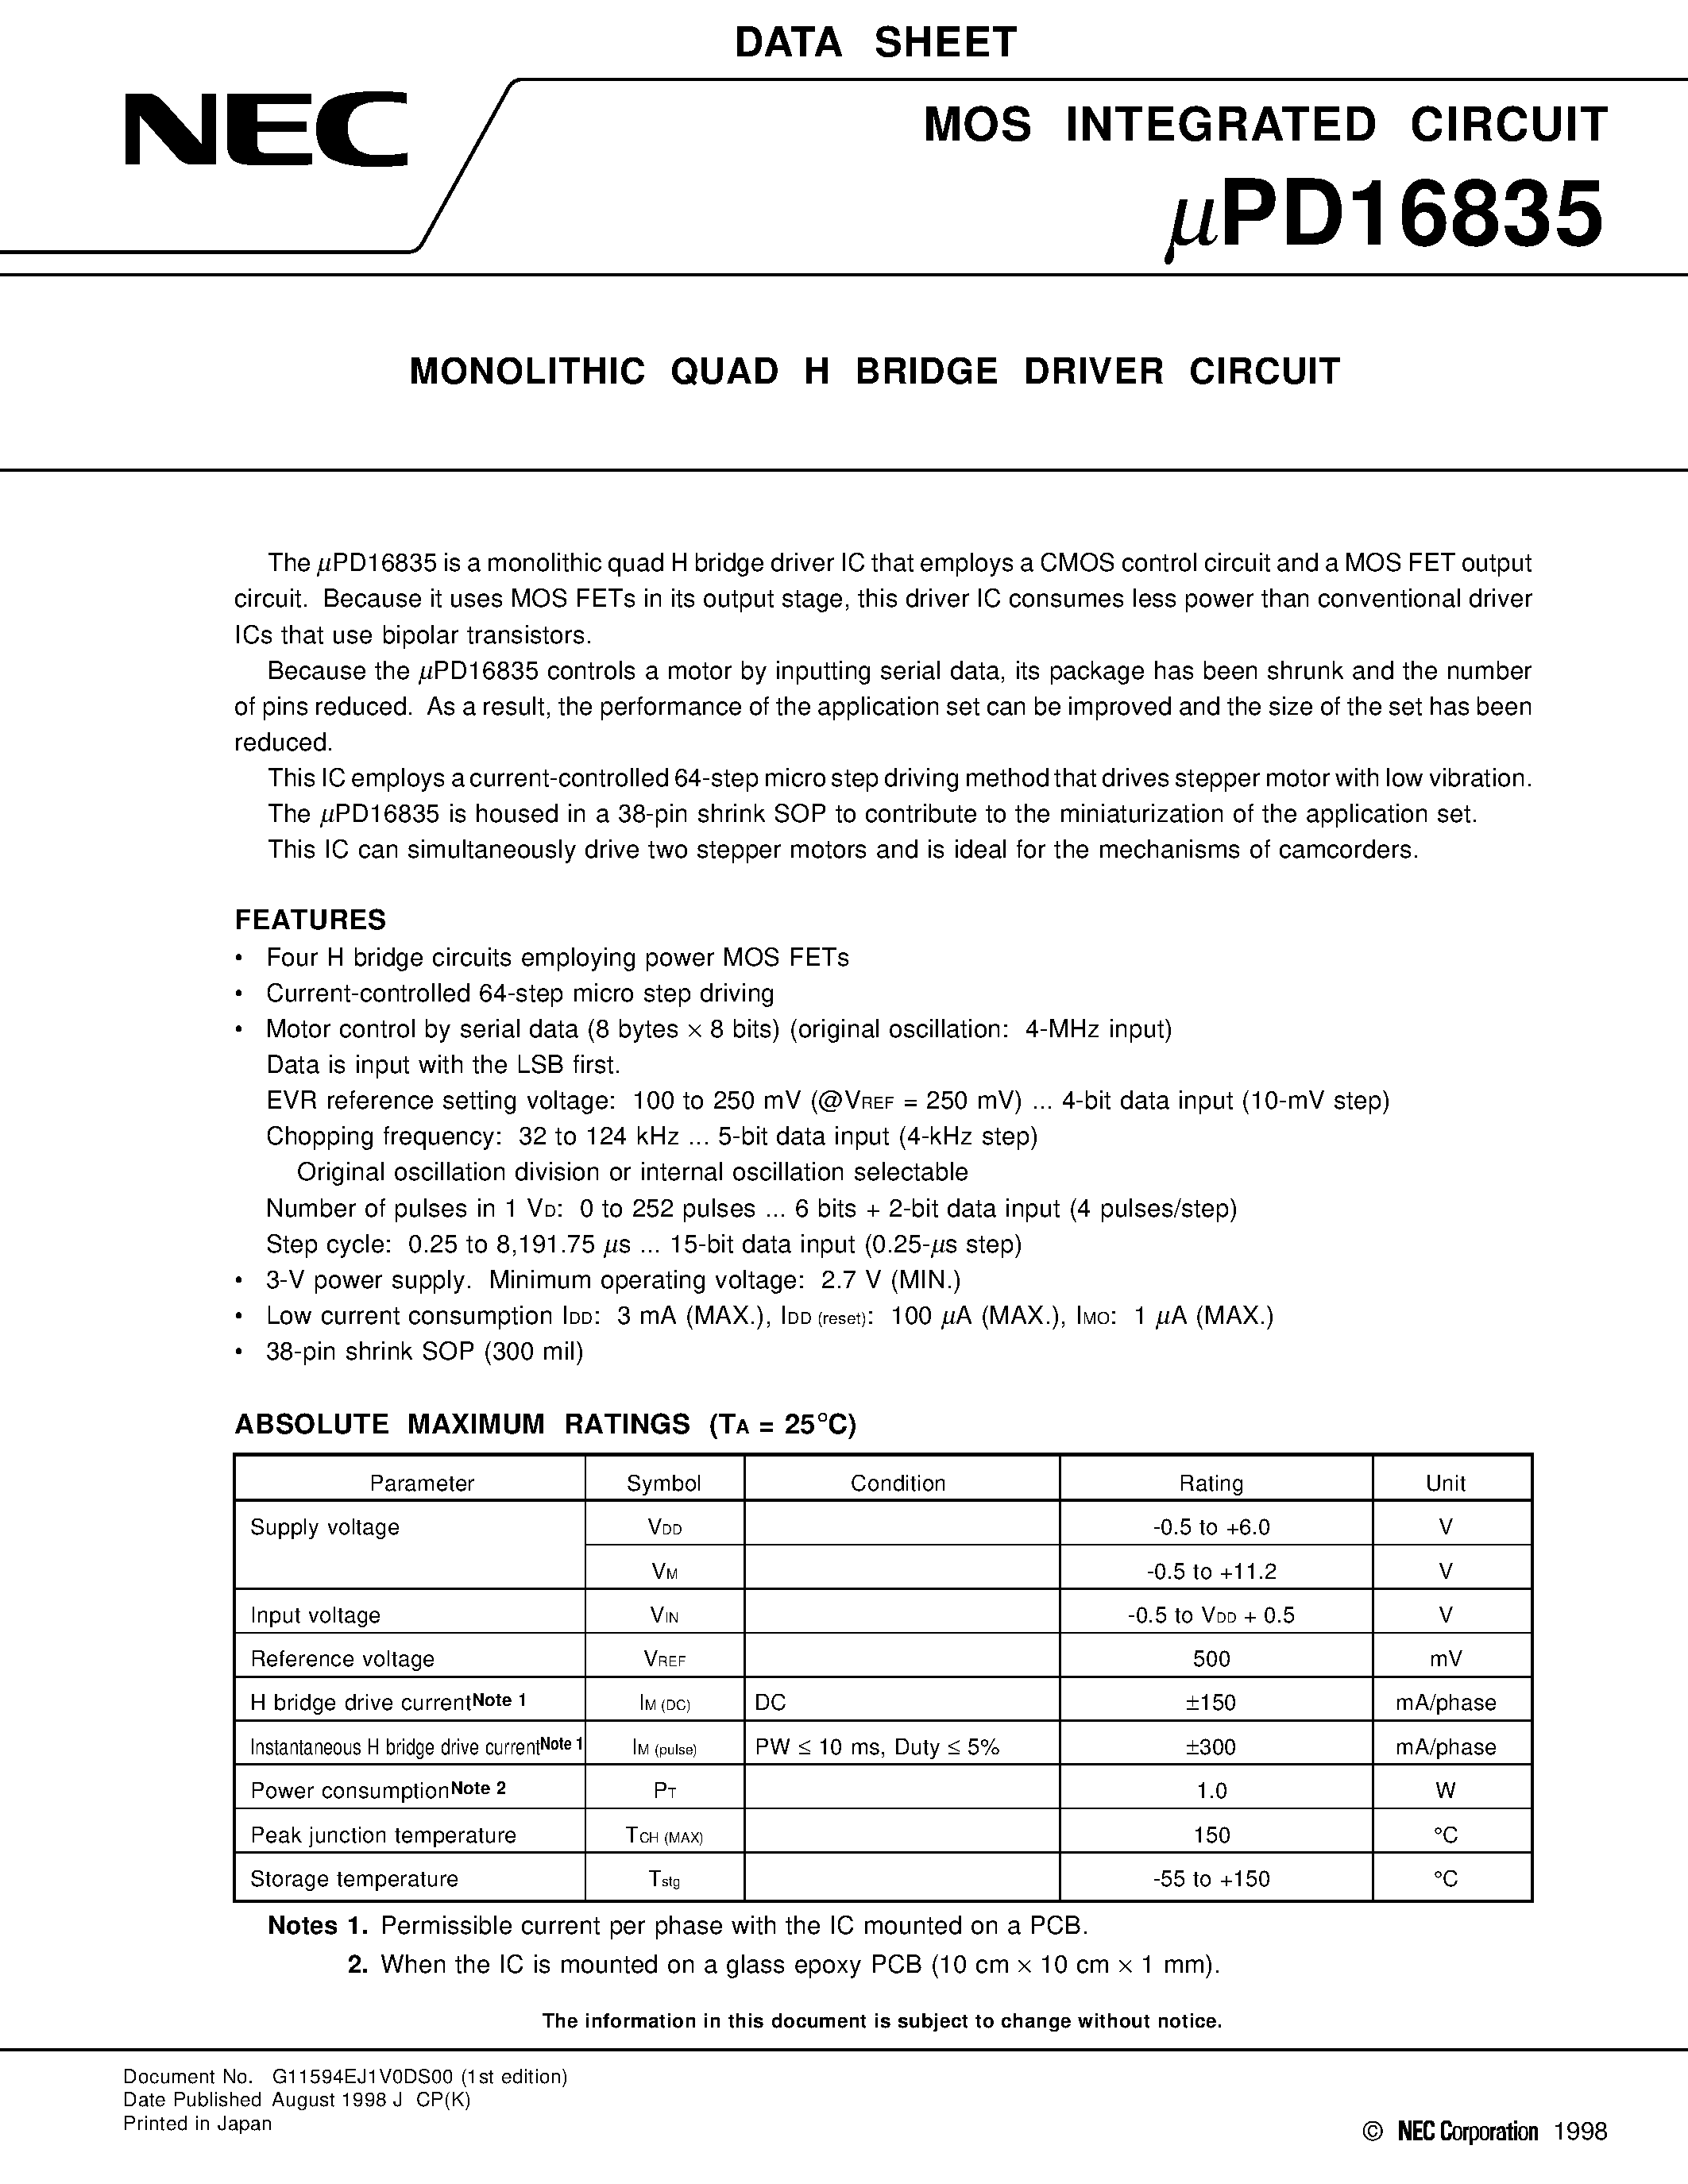 Даташит UPD16835 - MONOLITHIC QUAD H BRIDGE DRIVER CIRCUIT страница 1